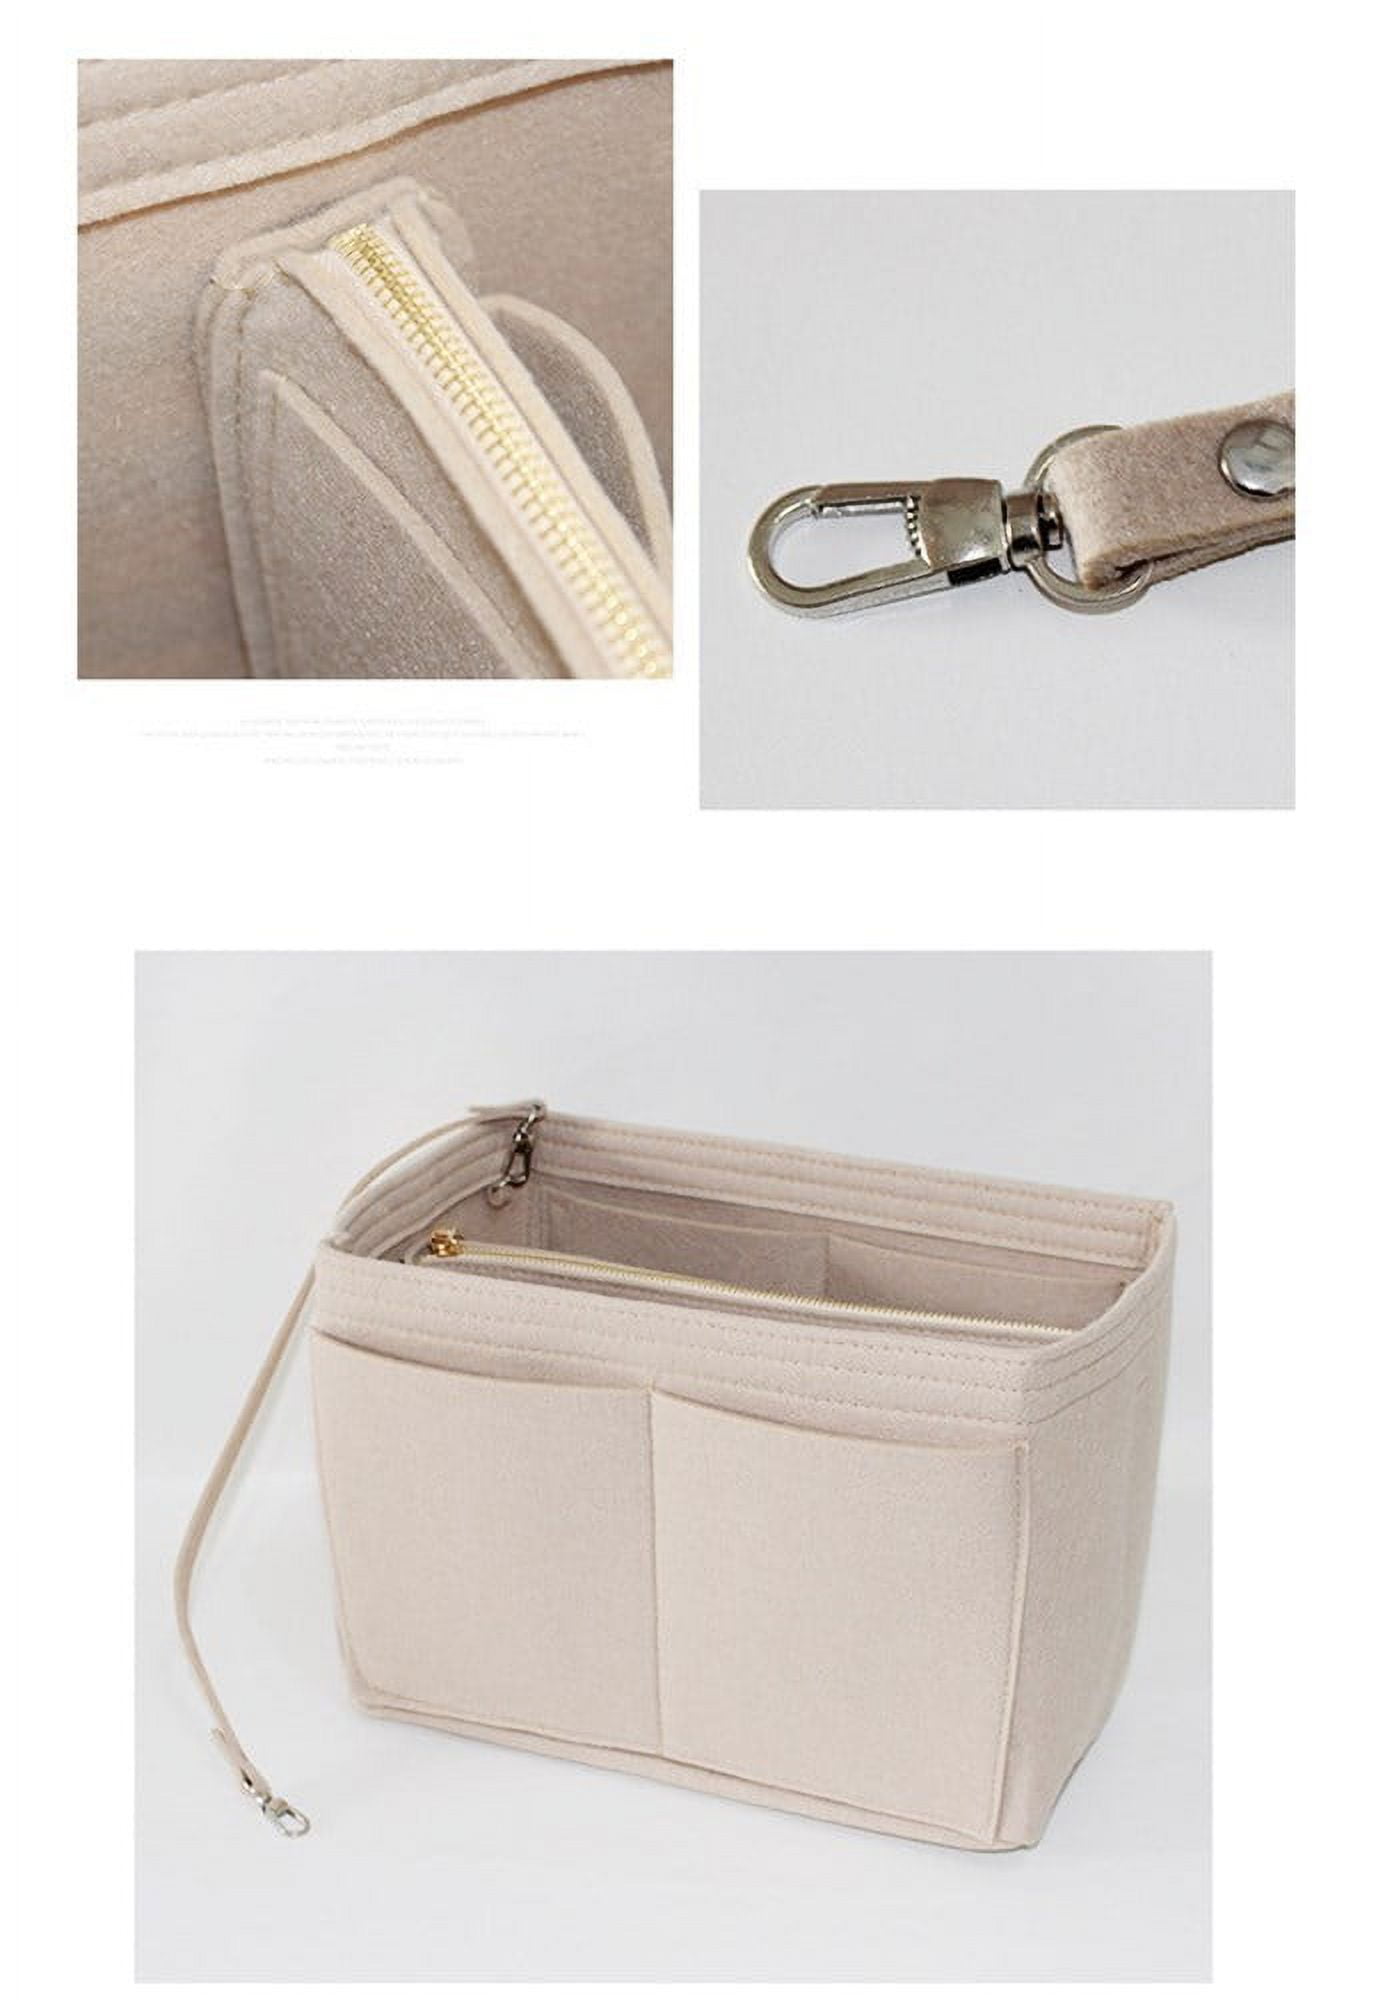 LEXSION Felt Purse Bag Organizer Insert with Zipper Bag Tote Shaper Fit Speedy Neverful PM mm 1-Beige Medium